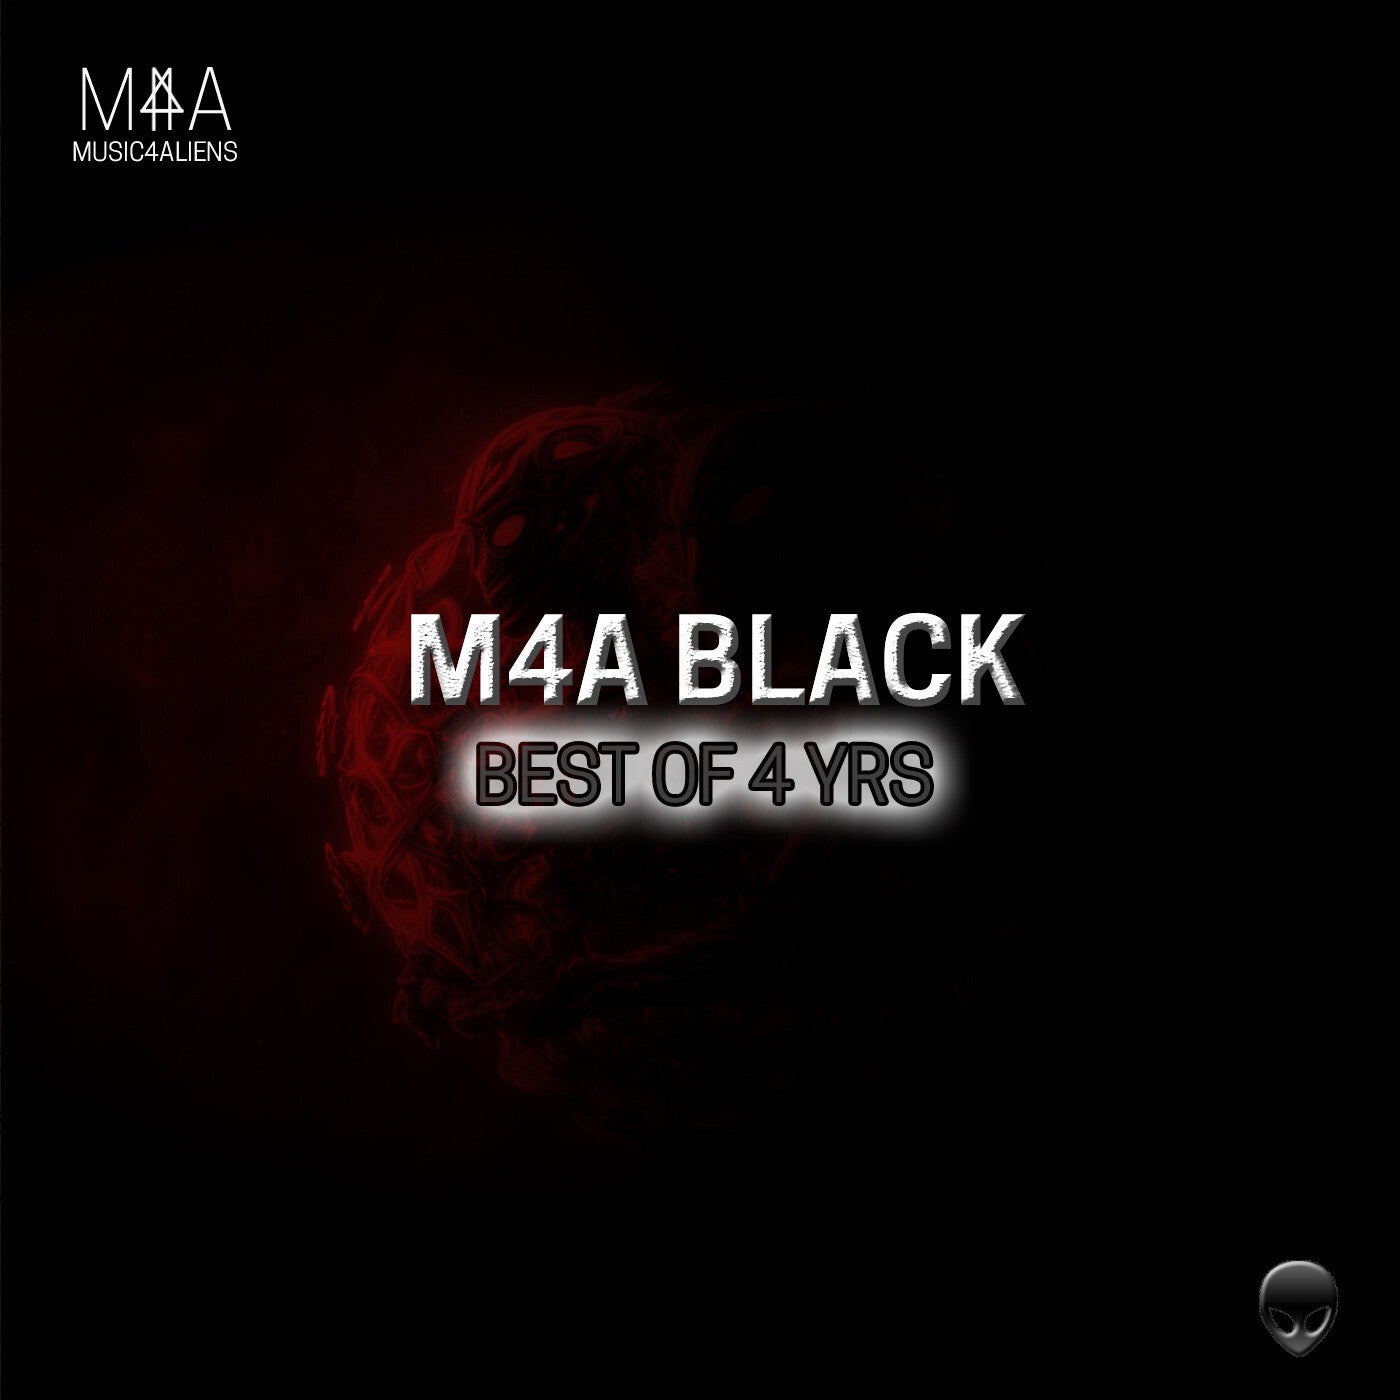 M4A Black Best of 4 YRS